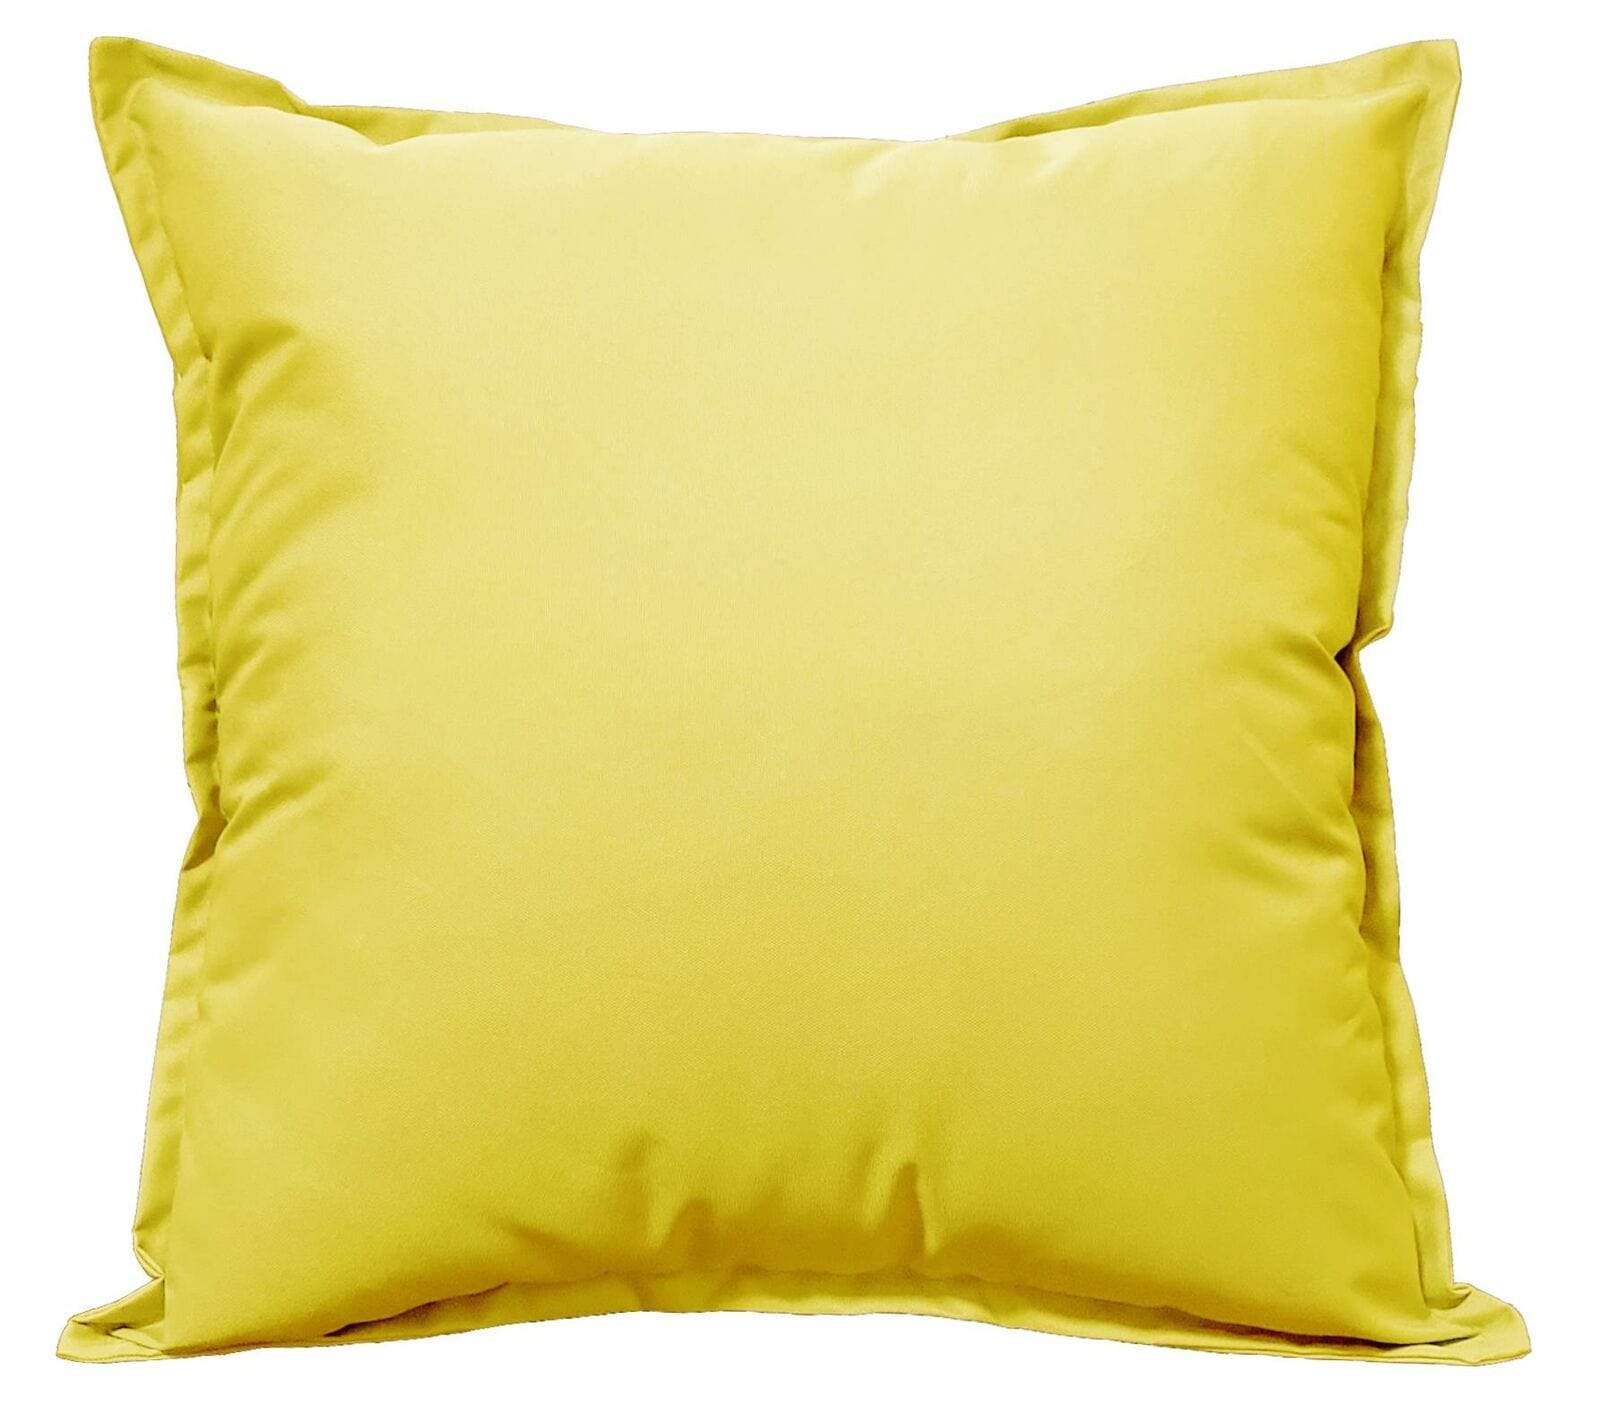 Outdoor Waterproof Cushions YELLOW / 43 x 43 cm OLIVIA ROCCO Cushions